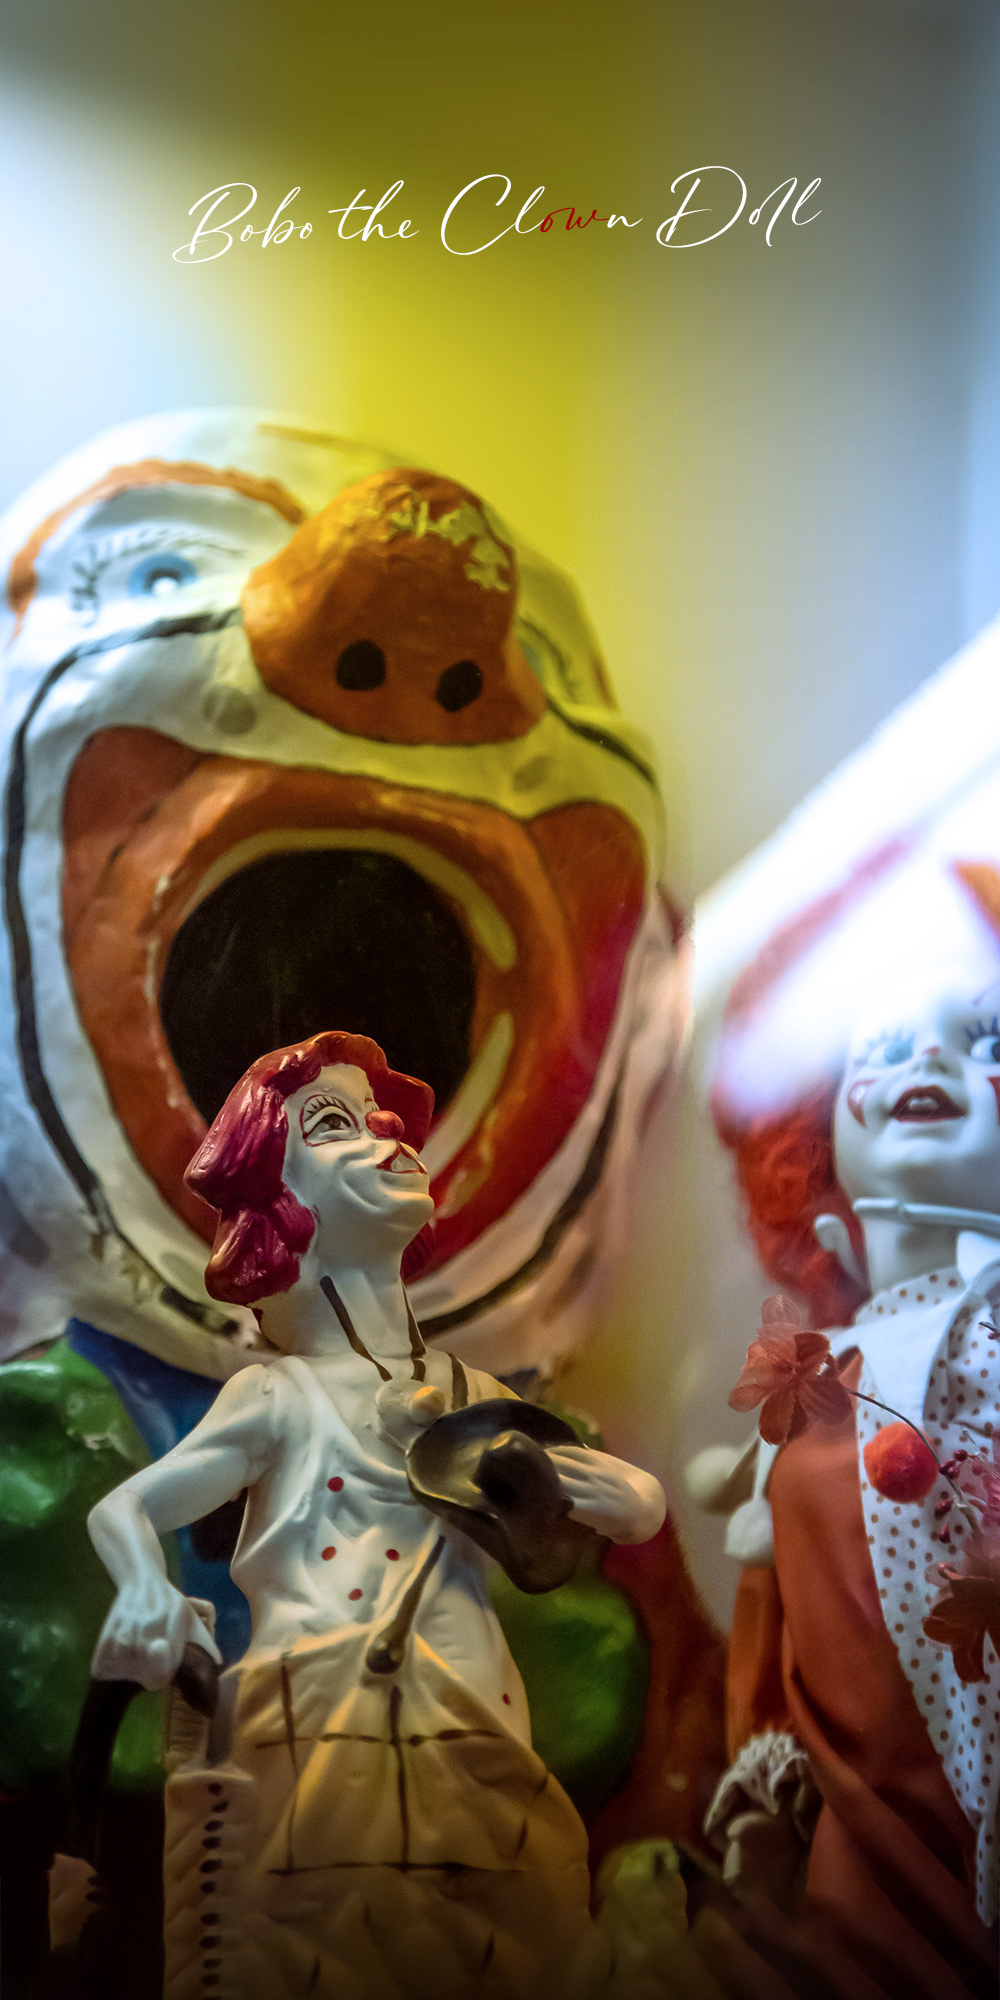 Jeff Kern design for "Bobo the Clown Doll"